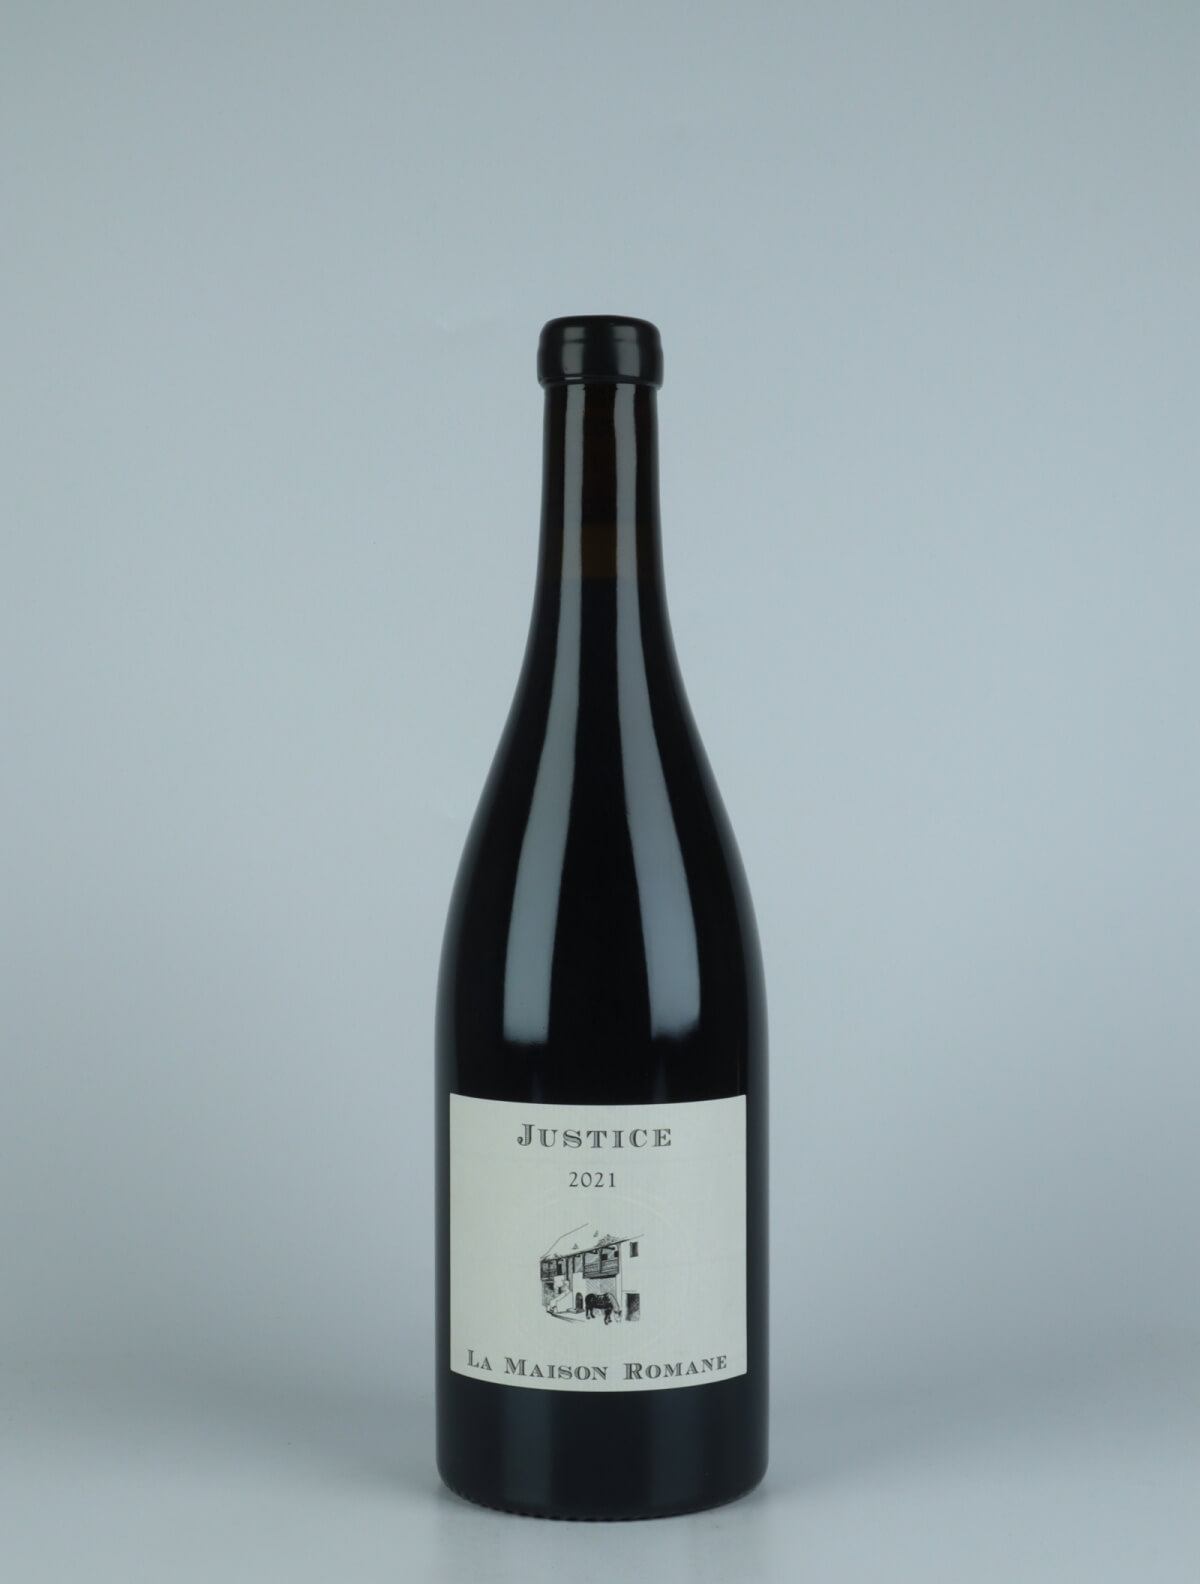 A bottle 2021 Gevrey Chambertin - La Justice Red wine from La Maison Romane, Burgundy in France